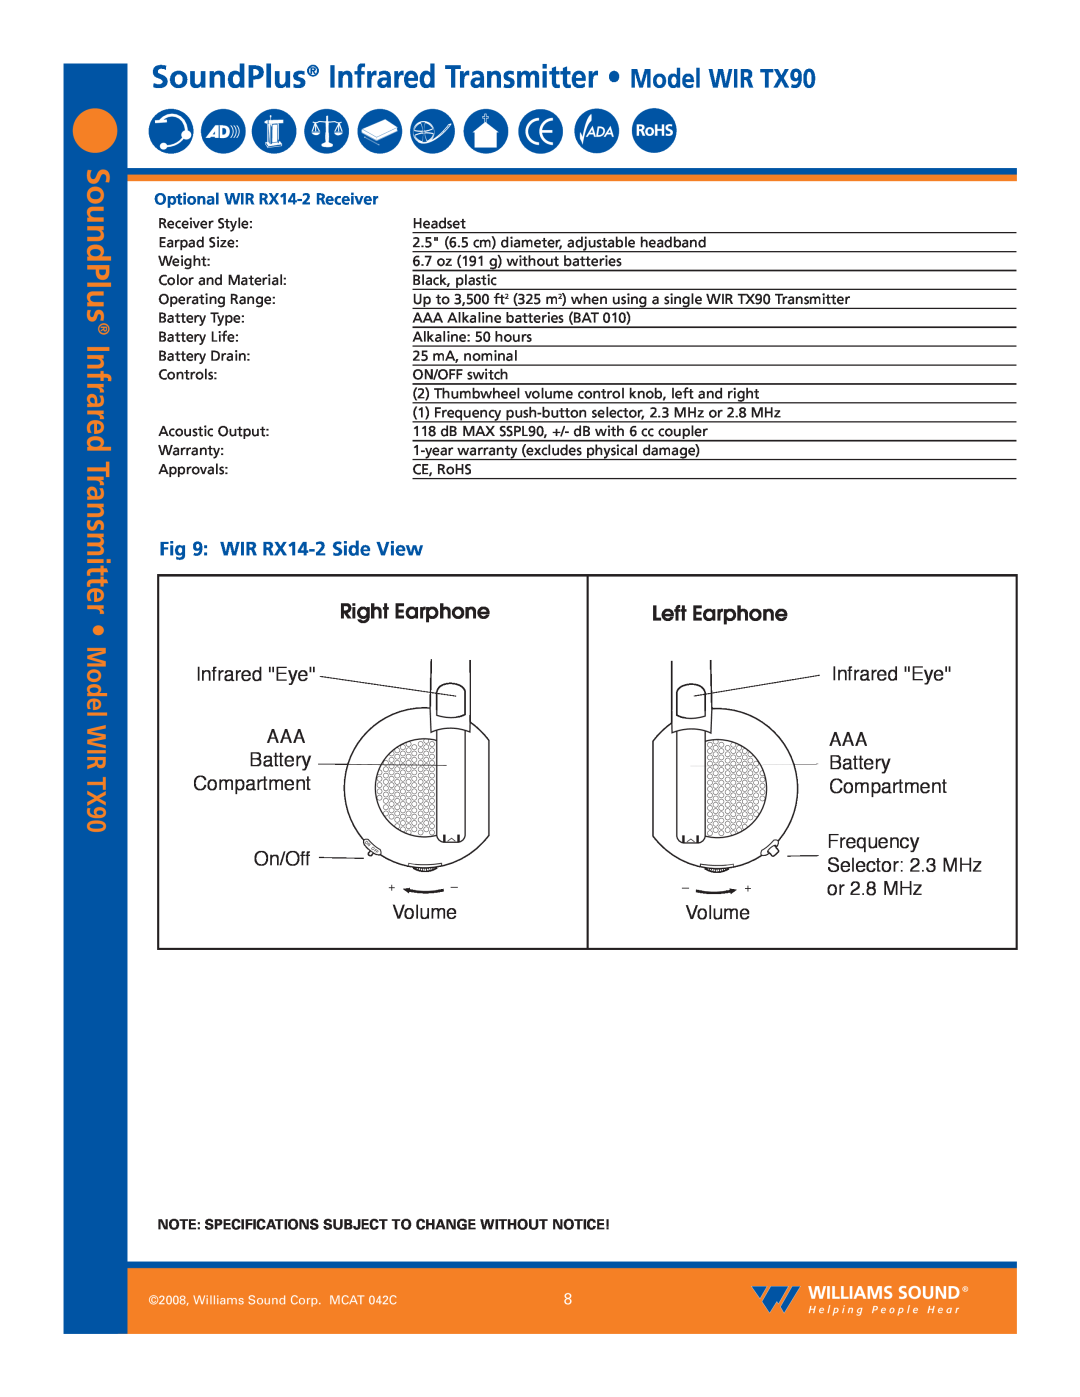 Williams Sound SoundPlus Infrared Transmitter, Model WIR TX90, WIR RX14-2Side View, Right Earphone, Left Earphone 